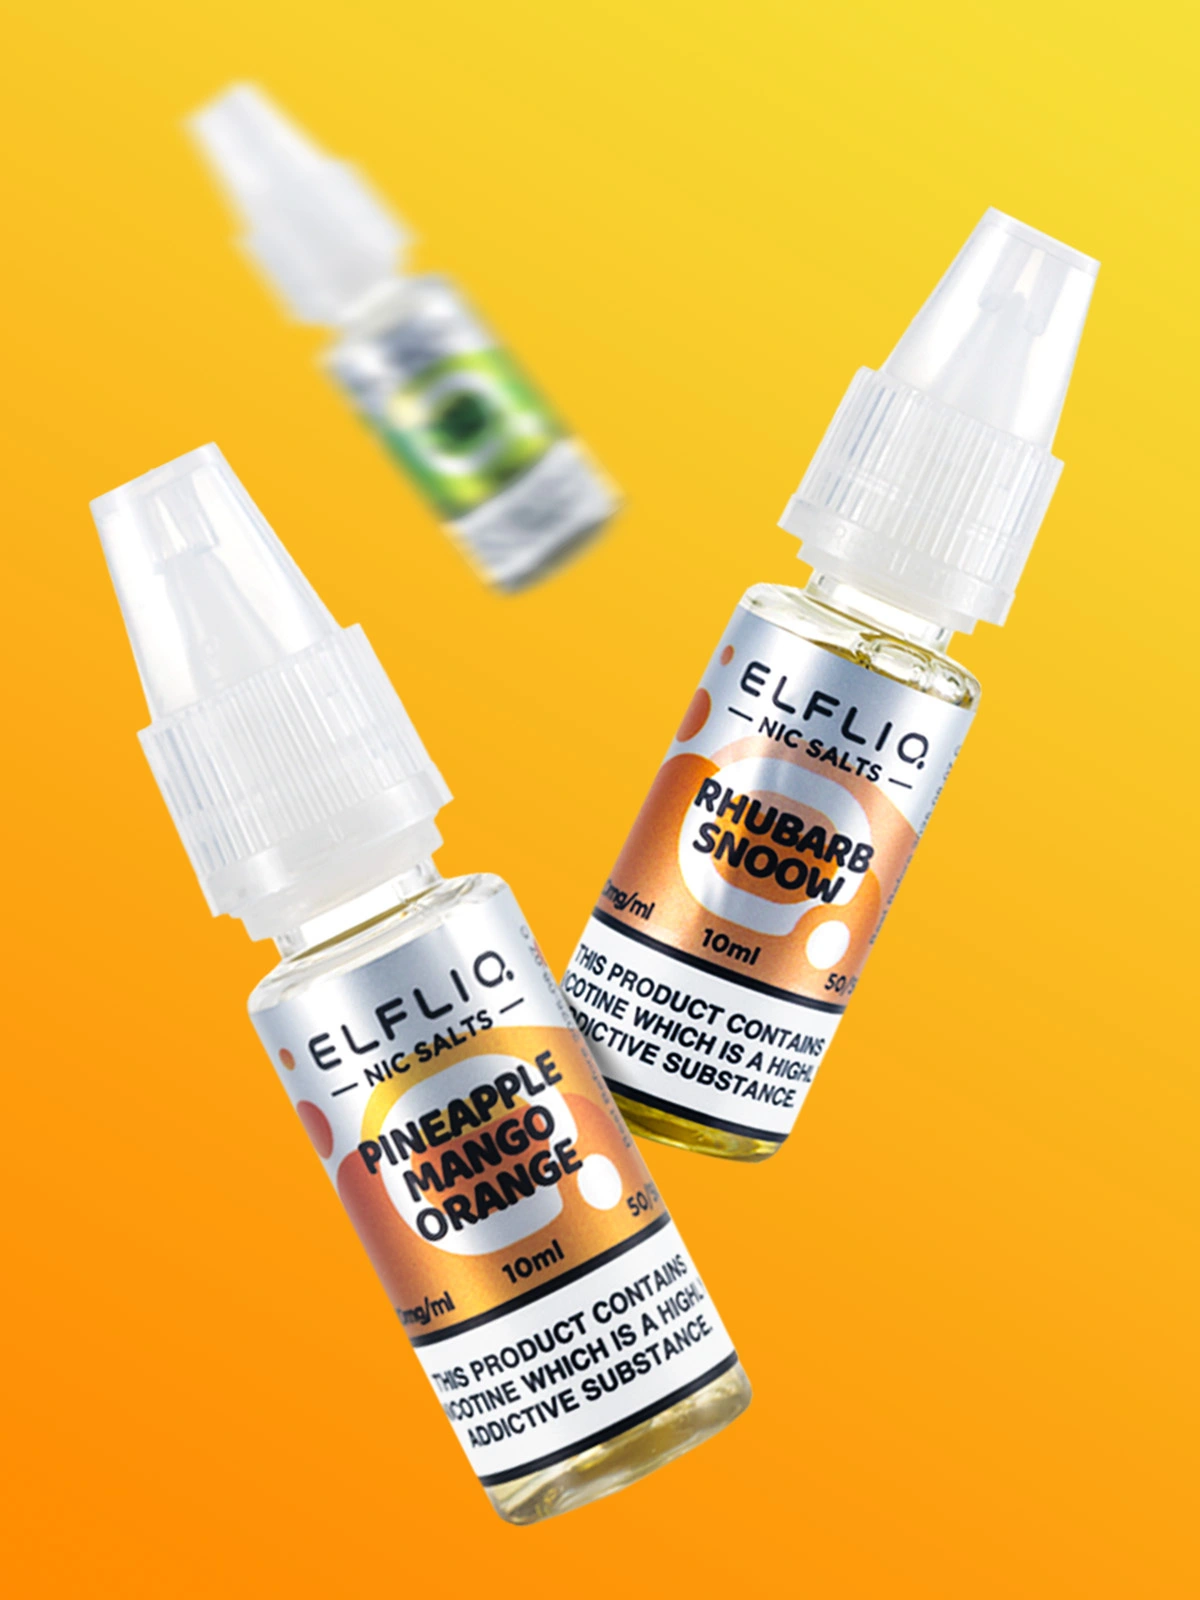 three bottles of Elfliq e-liquid including Pineapple Mango Orange and Rhubarb Snoow in front of an orange background